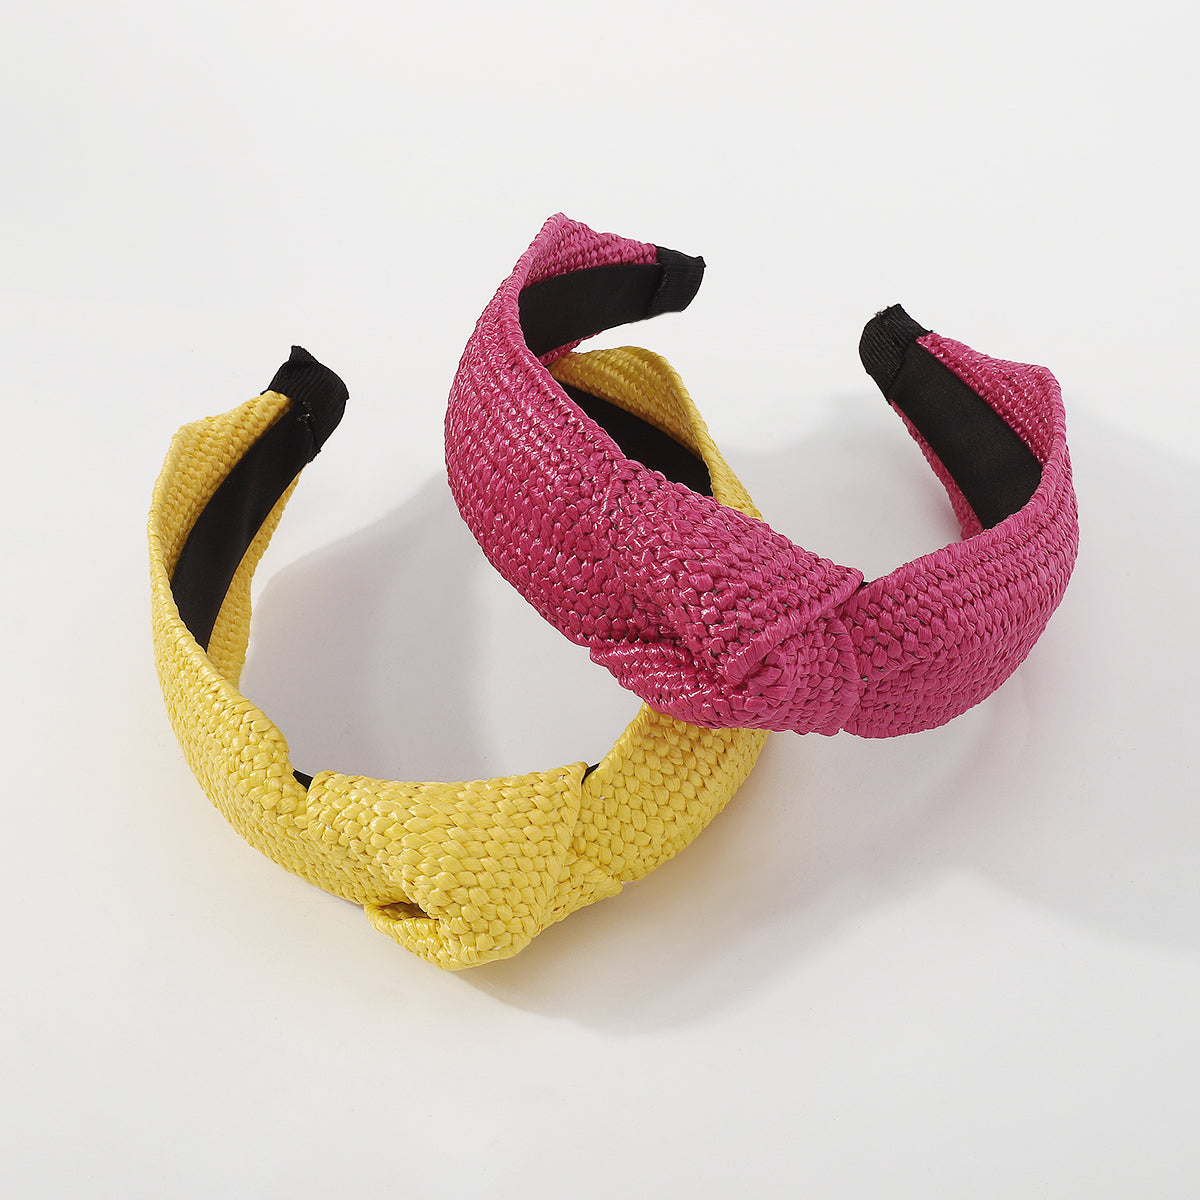 Red & Yellow Raffia Knotted Headbands medyjewelry